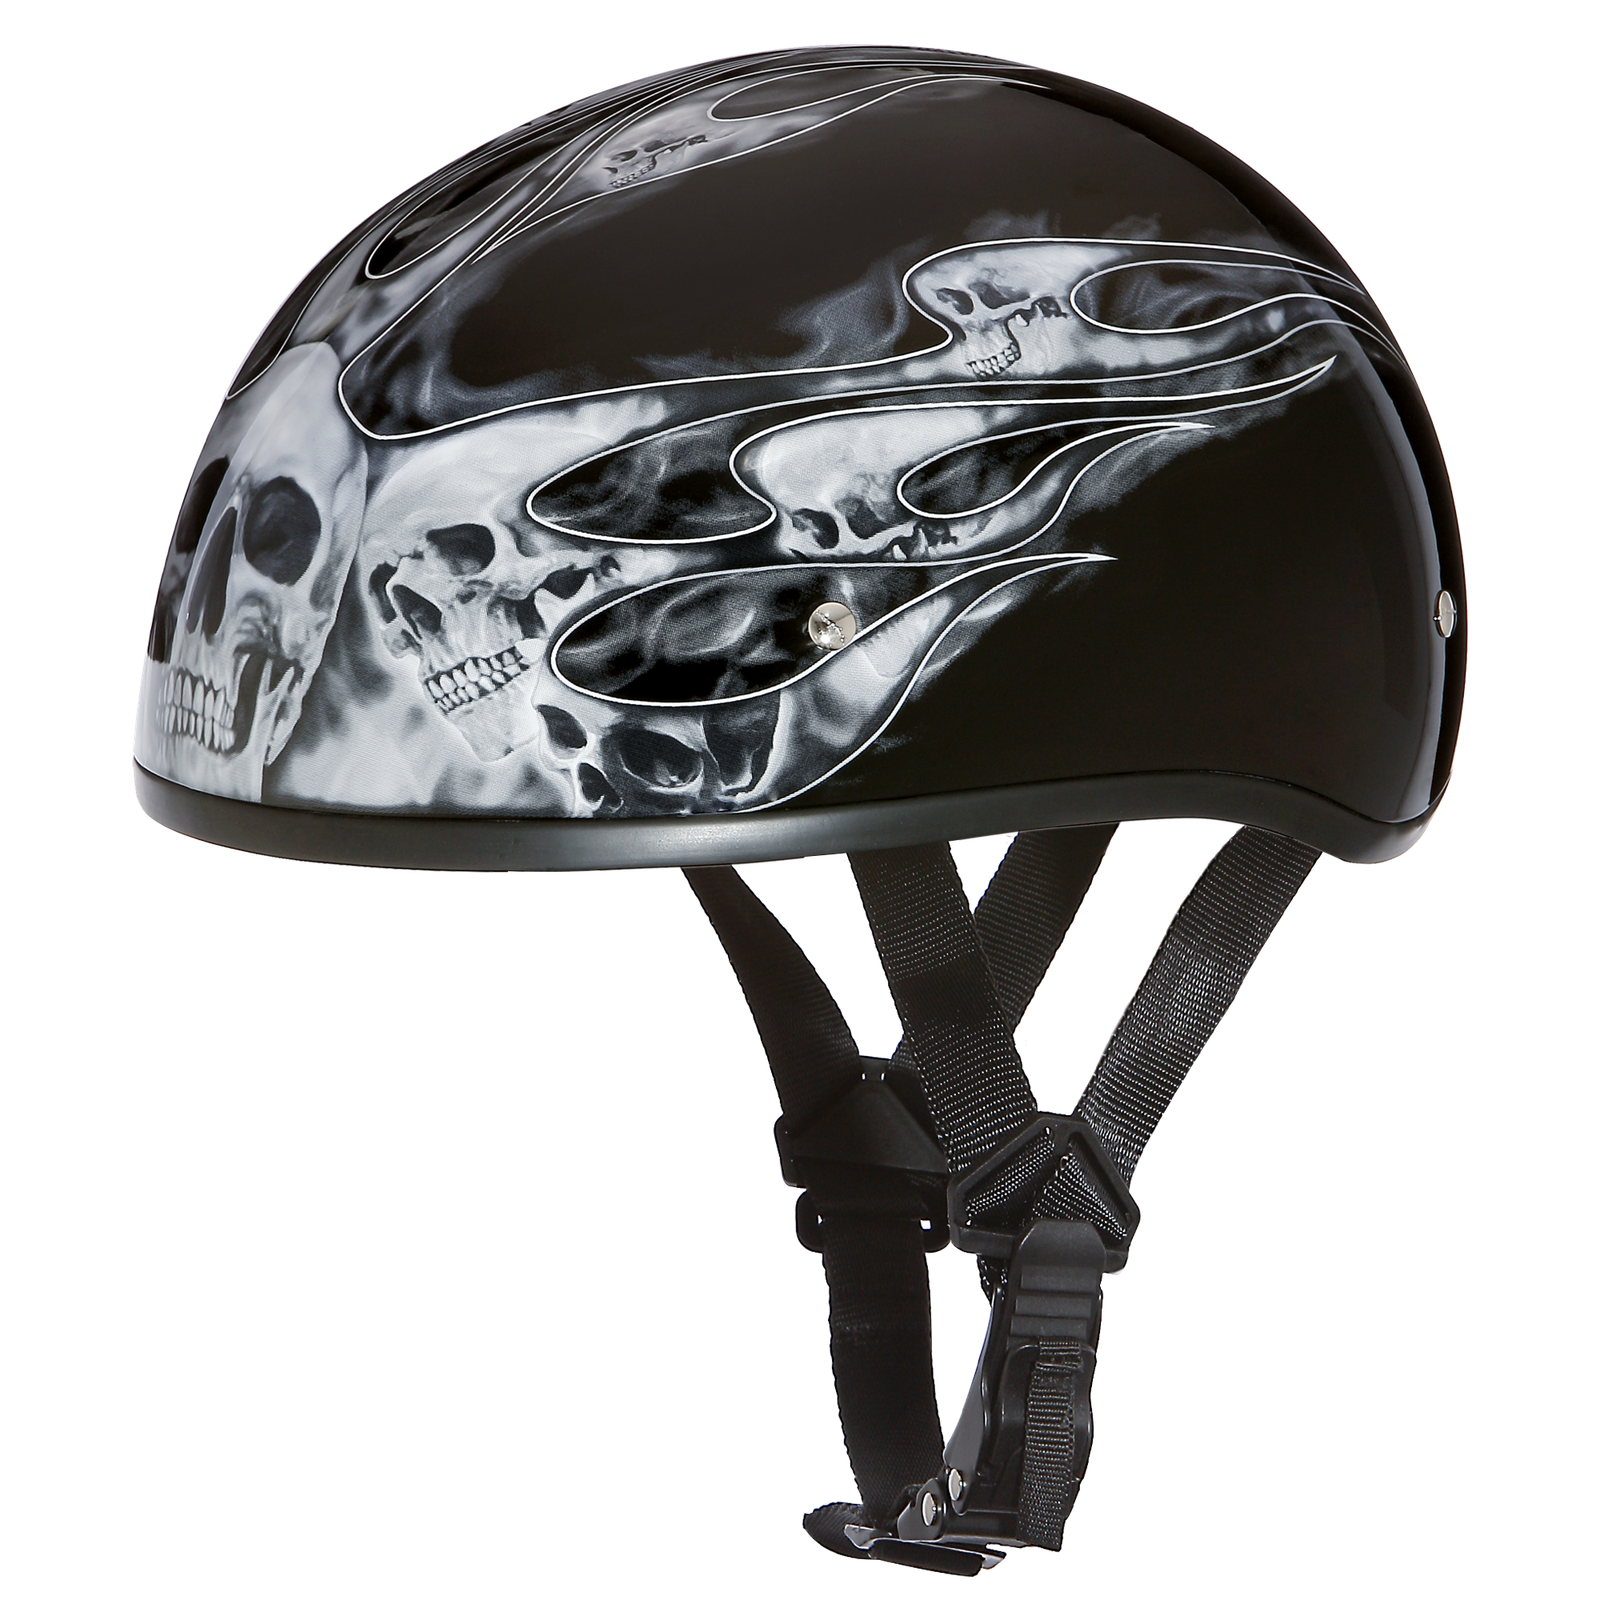 DOT Motorcycle Helmet - Skull Silver Flames - Shorty - D6-SFS-DH